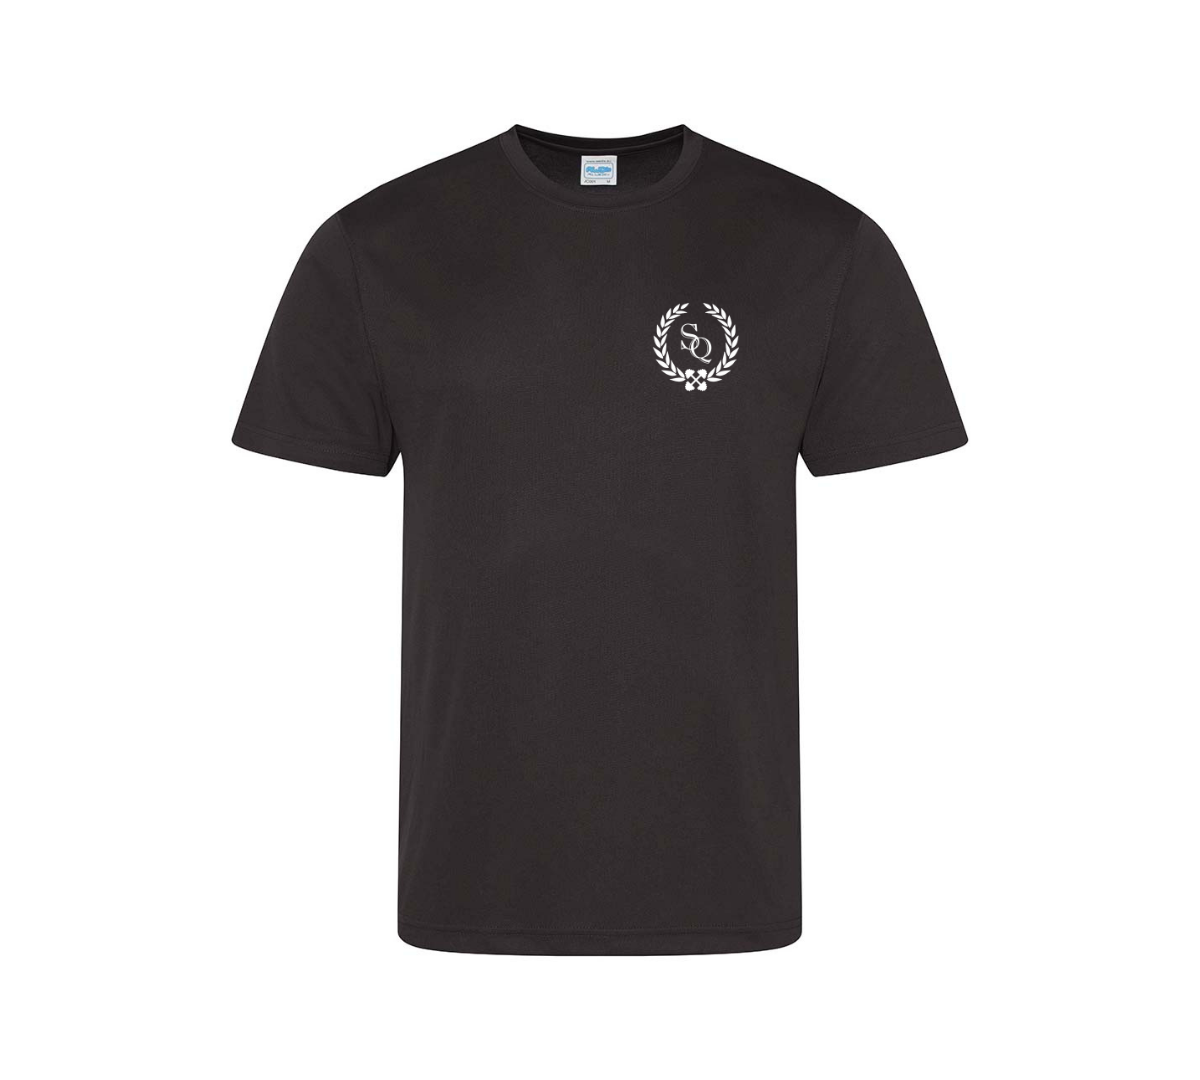 The Shredquarters Cannon Street Training T-Shirts